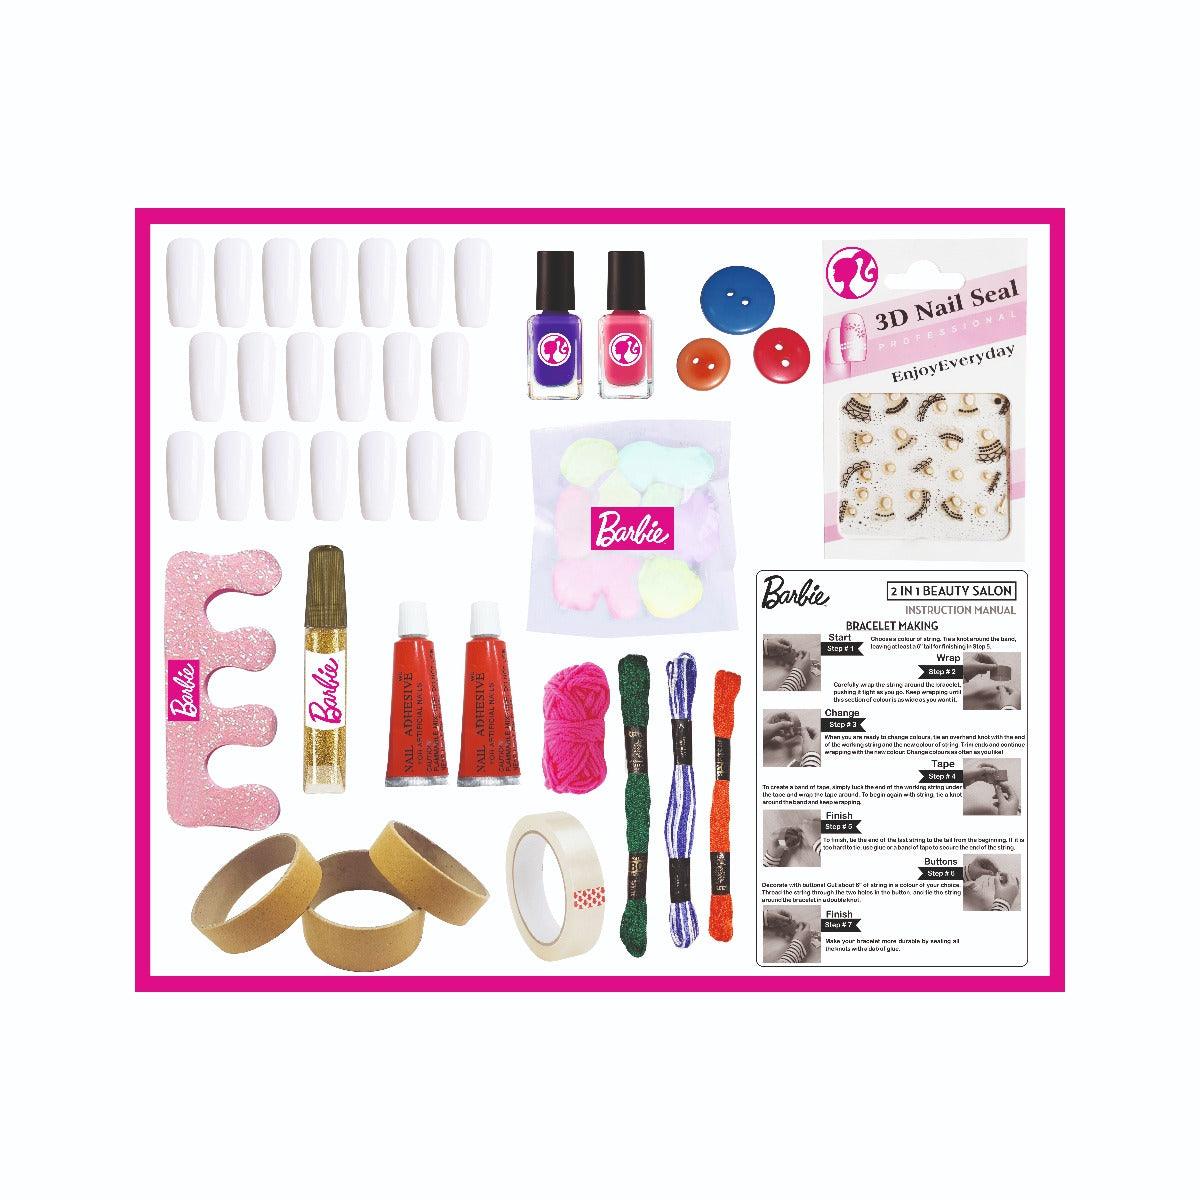 Barbie 2 in 1 Beauty Salon Nail Art and Bracelet Making Kit